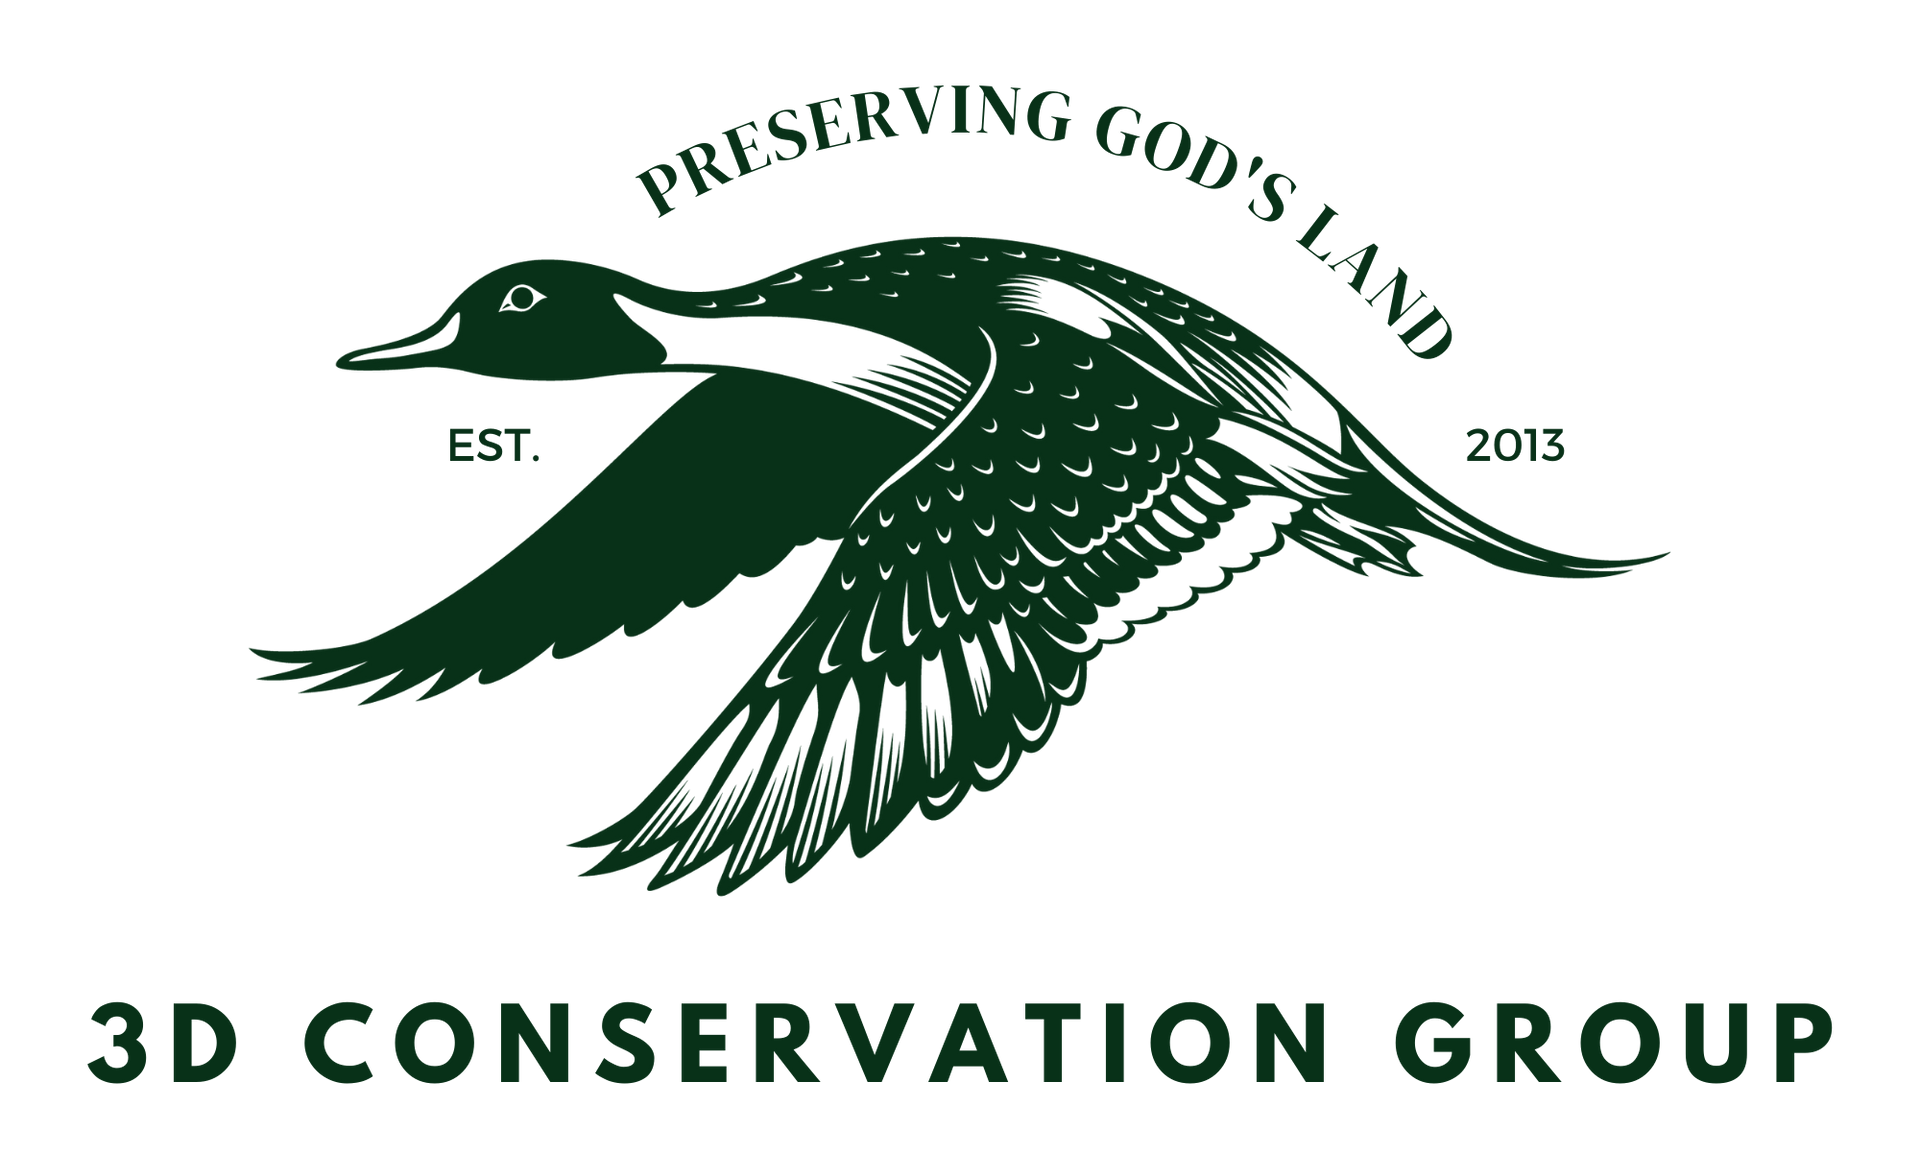 3D Conservation Group: We Buy Land